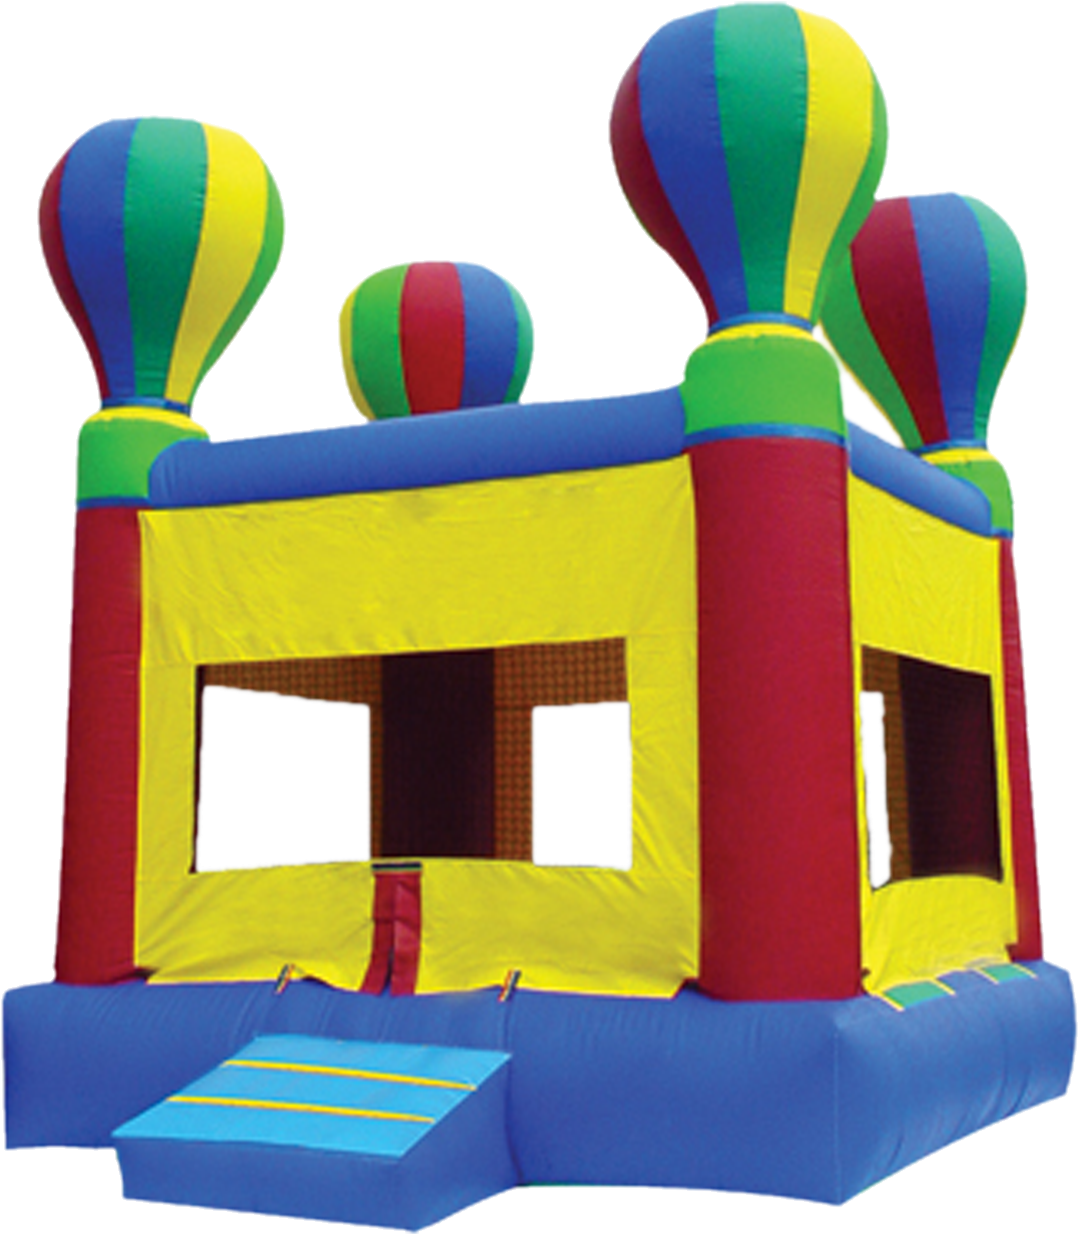 Giraffe Bounce House, Horse Bounce House, Hot Air Balloon - Hot Air Balloon Bounce House (1149x1304)